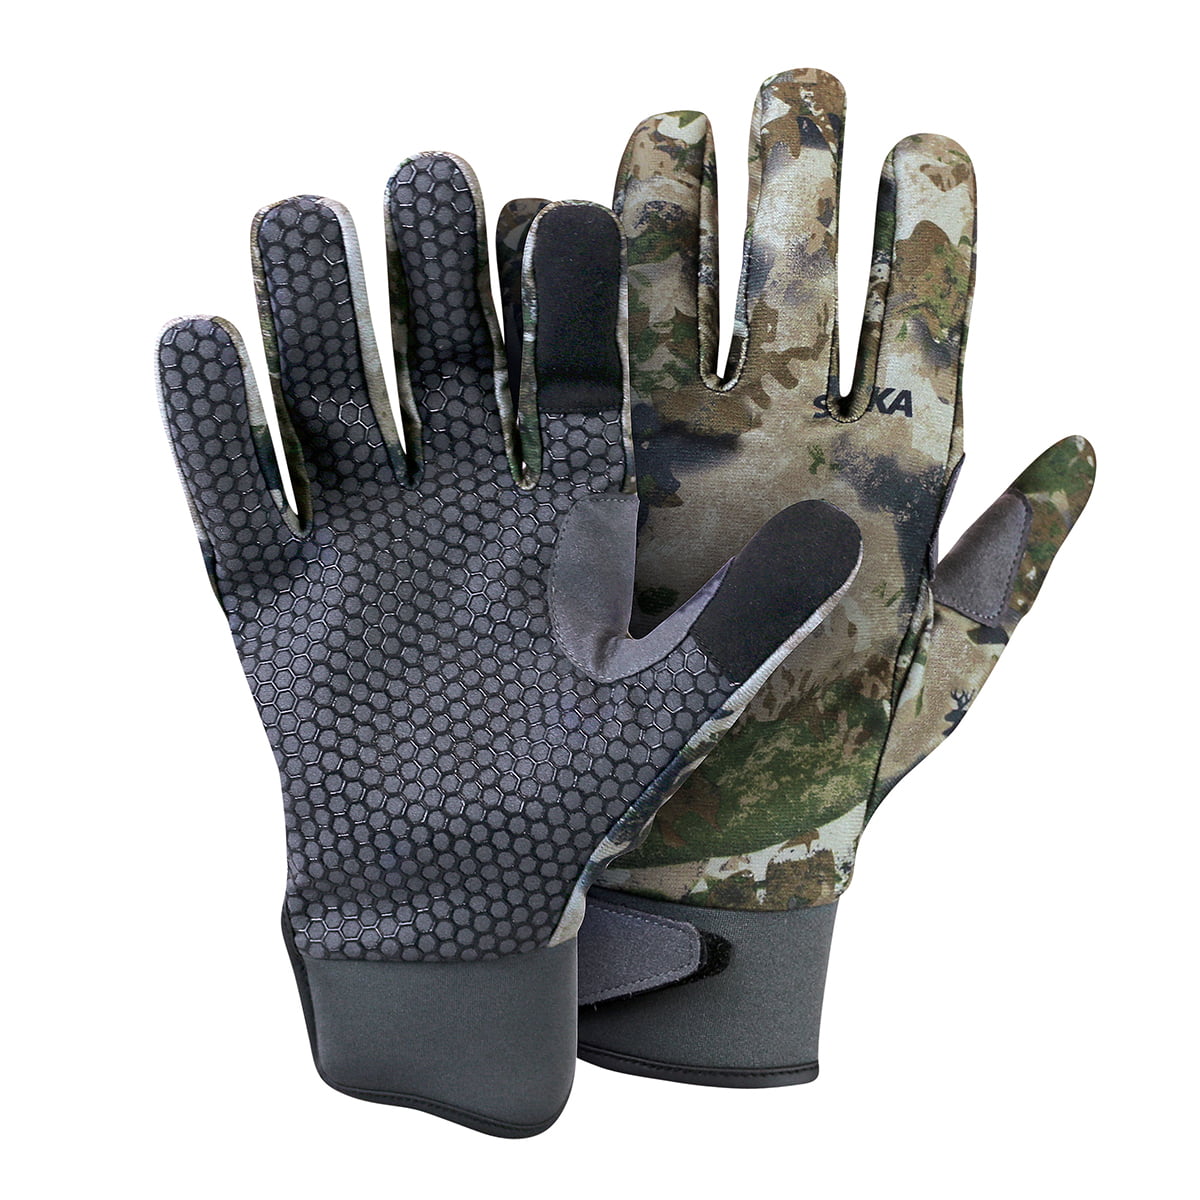 Spika Ranger Gloves - Biarri Camo - S - Mansfield Hunting & Fishing - Products to prepare for Corona Virus